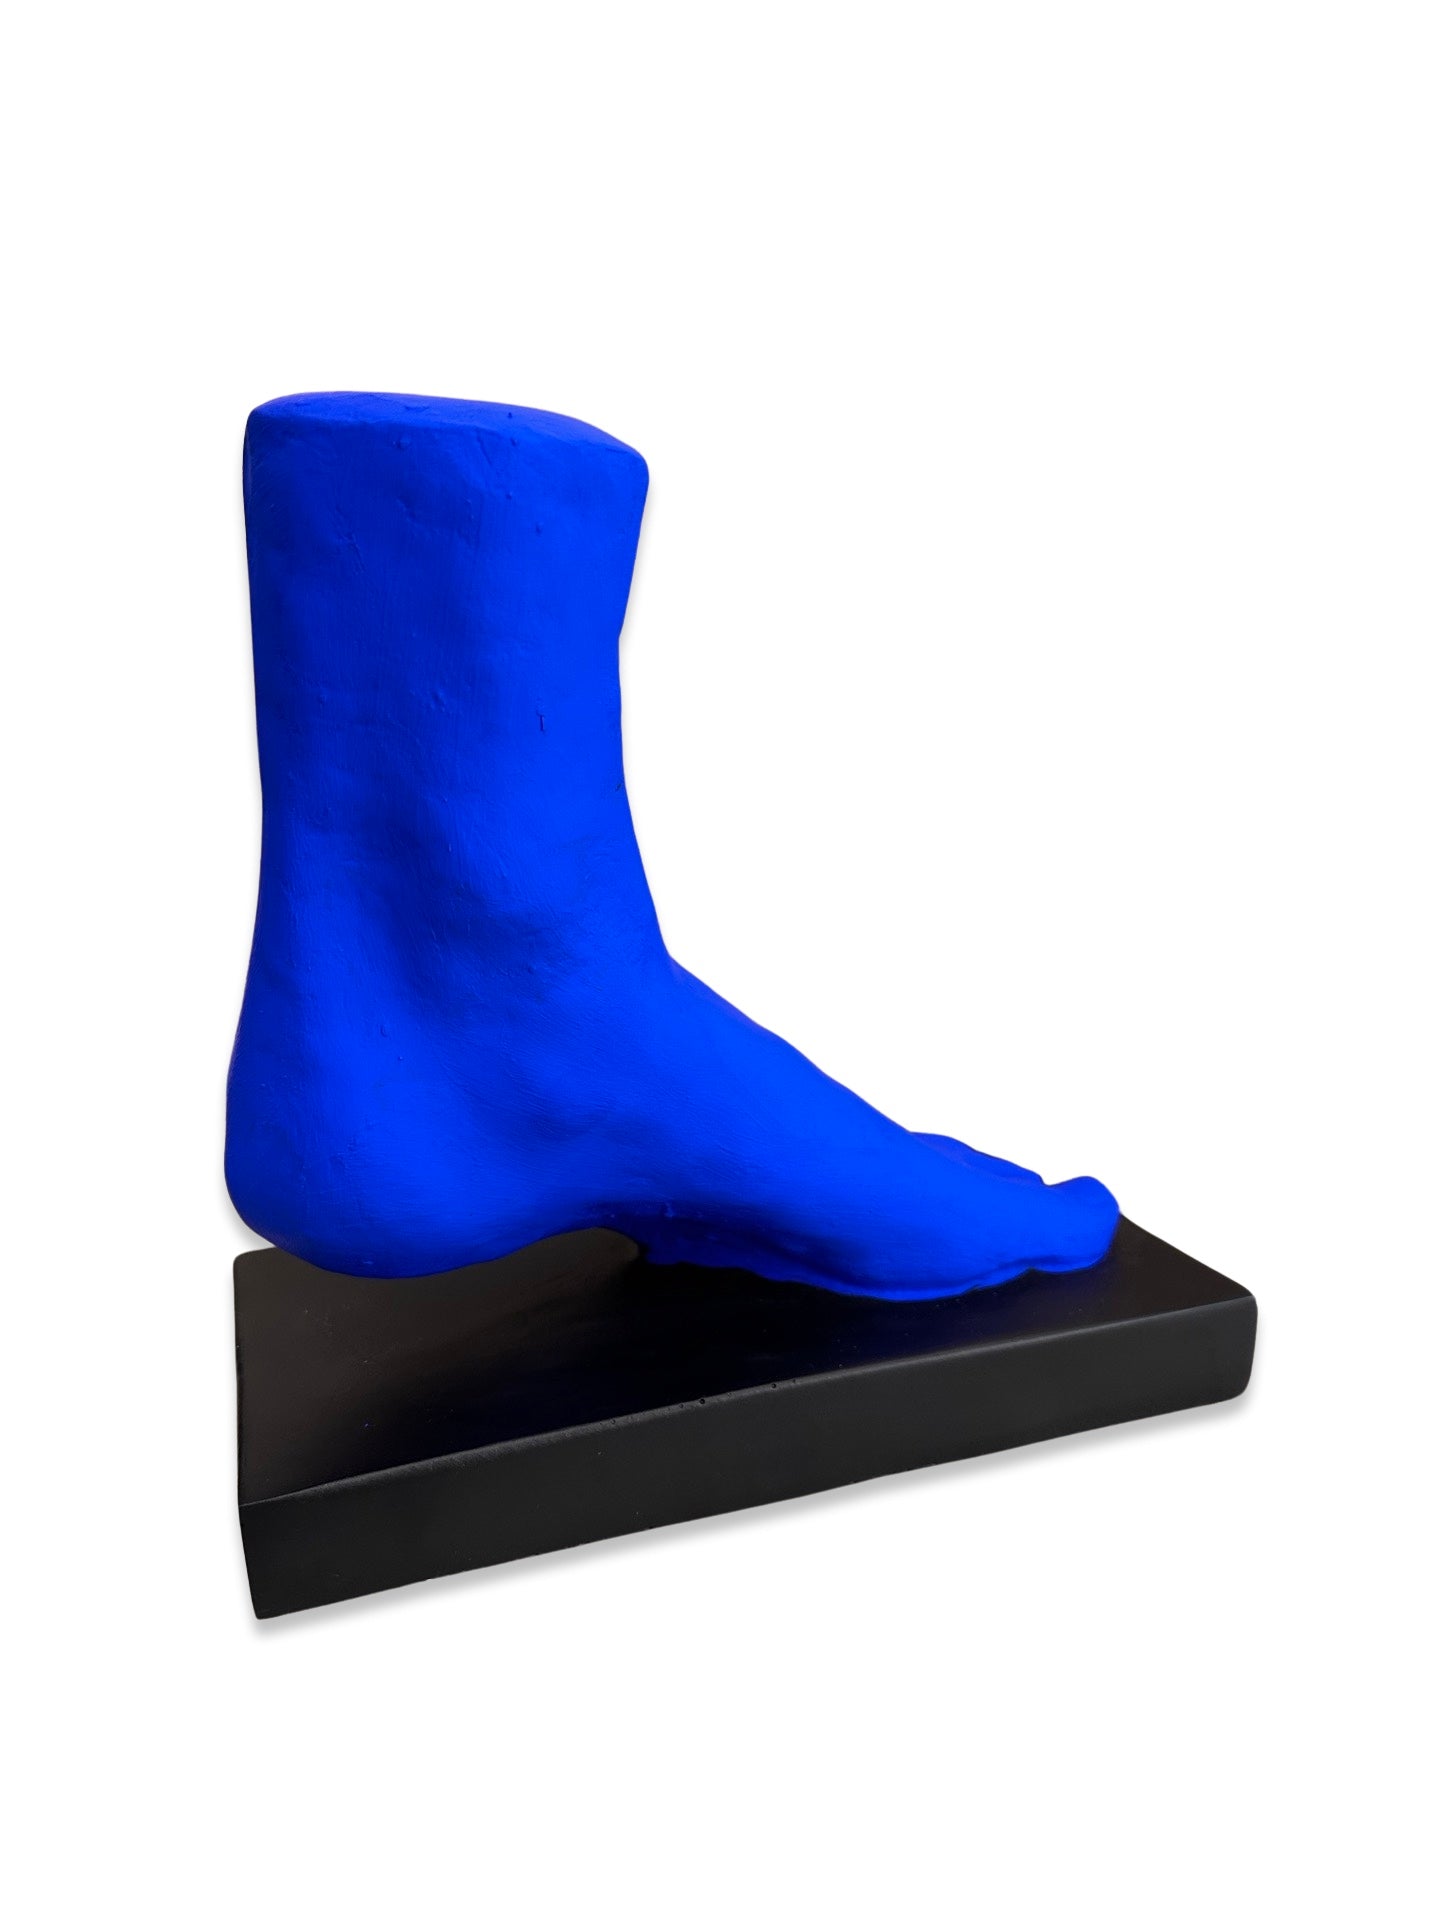 Yves Klein Blue Foot Sculpture